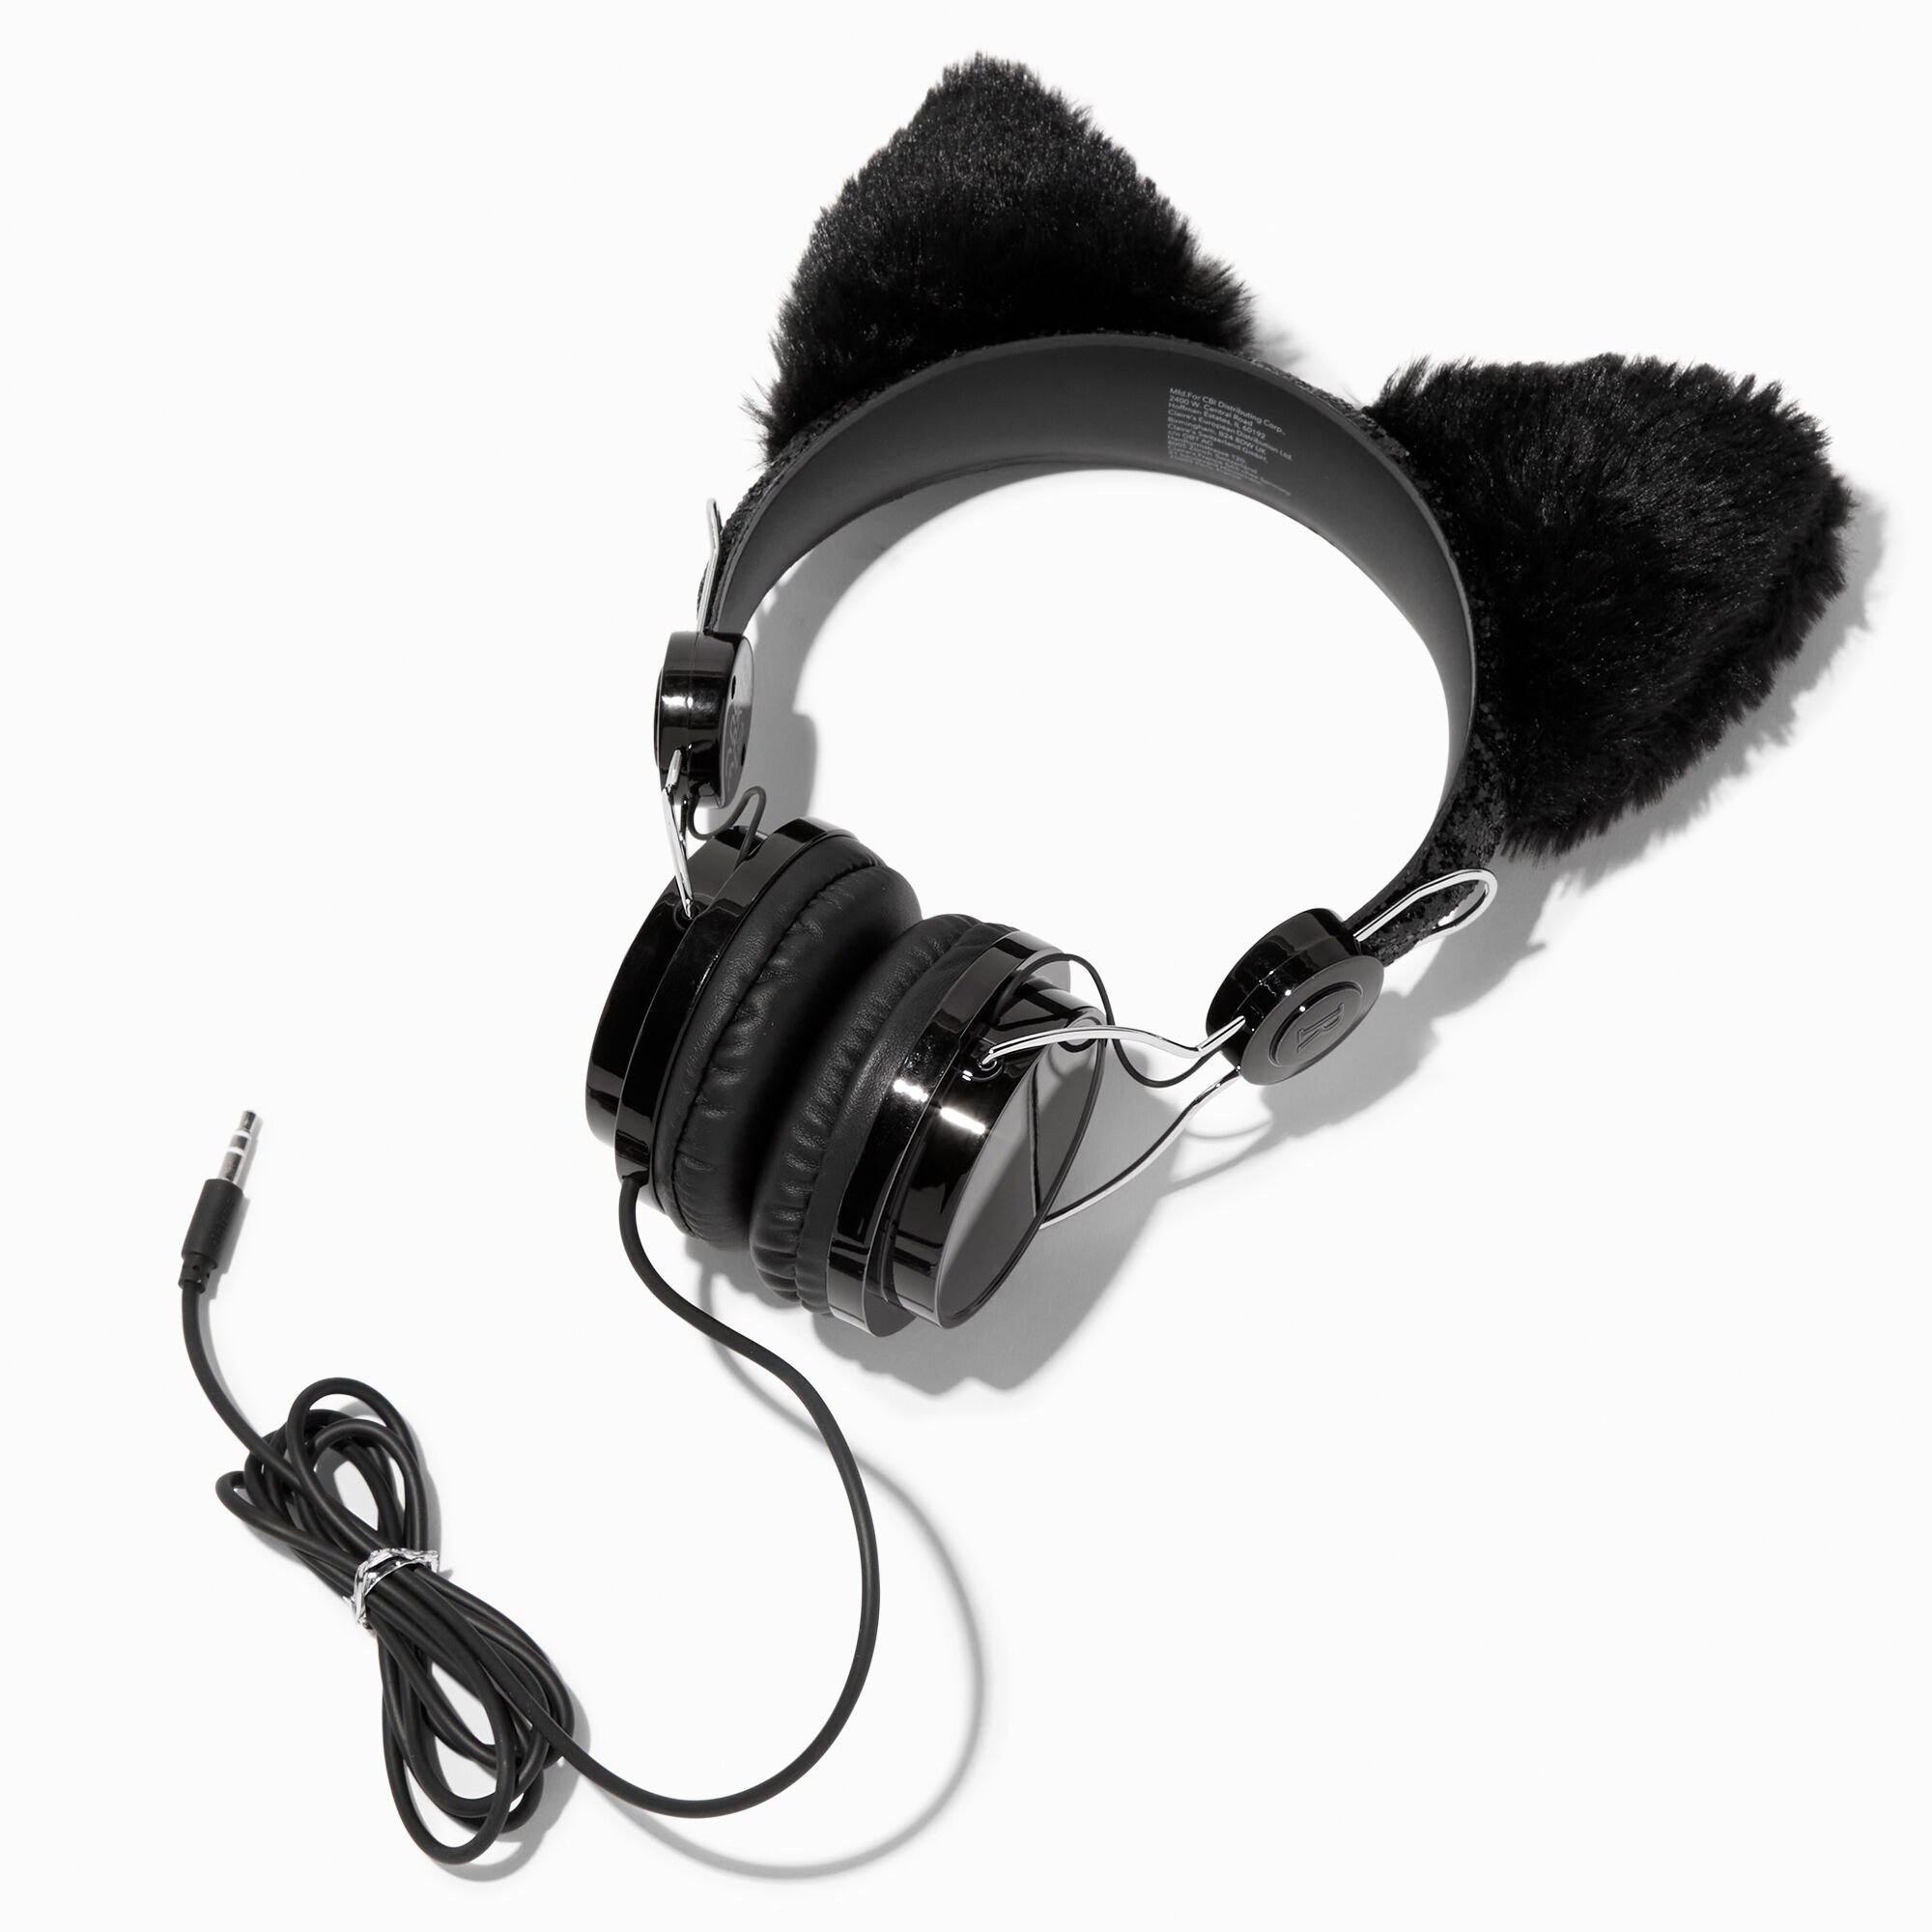 View Claires Furry Cat Ear Headphones Black information